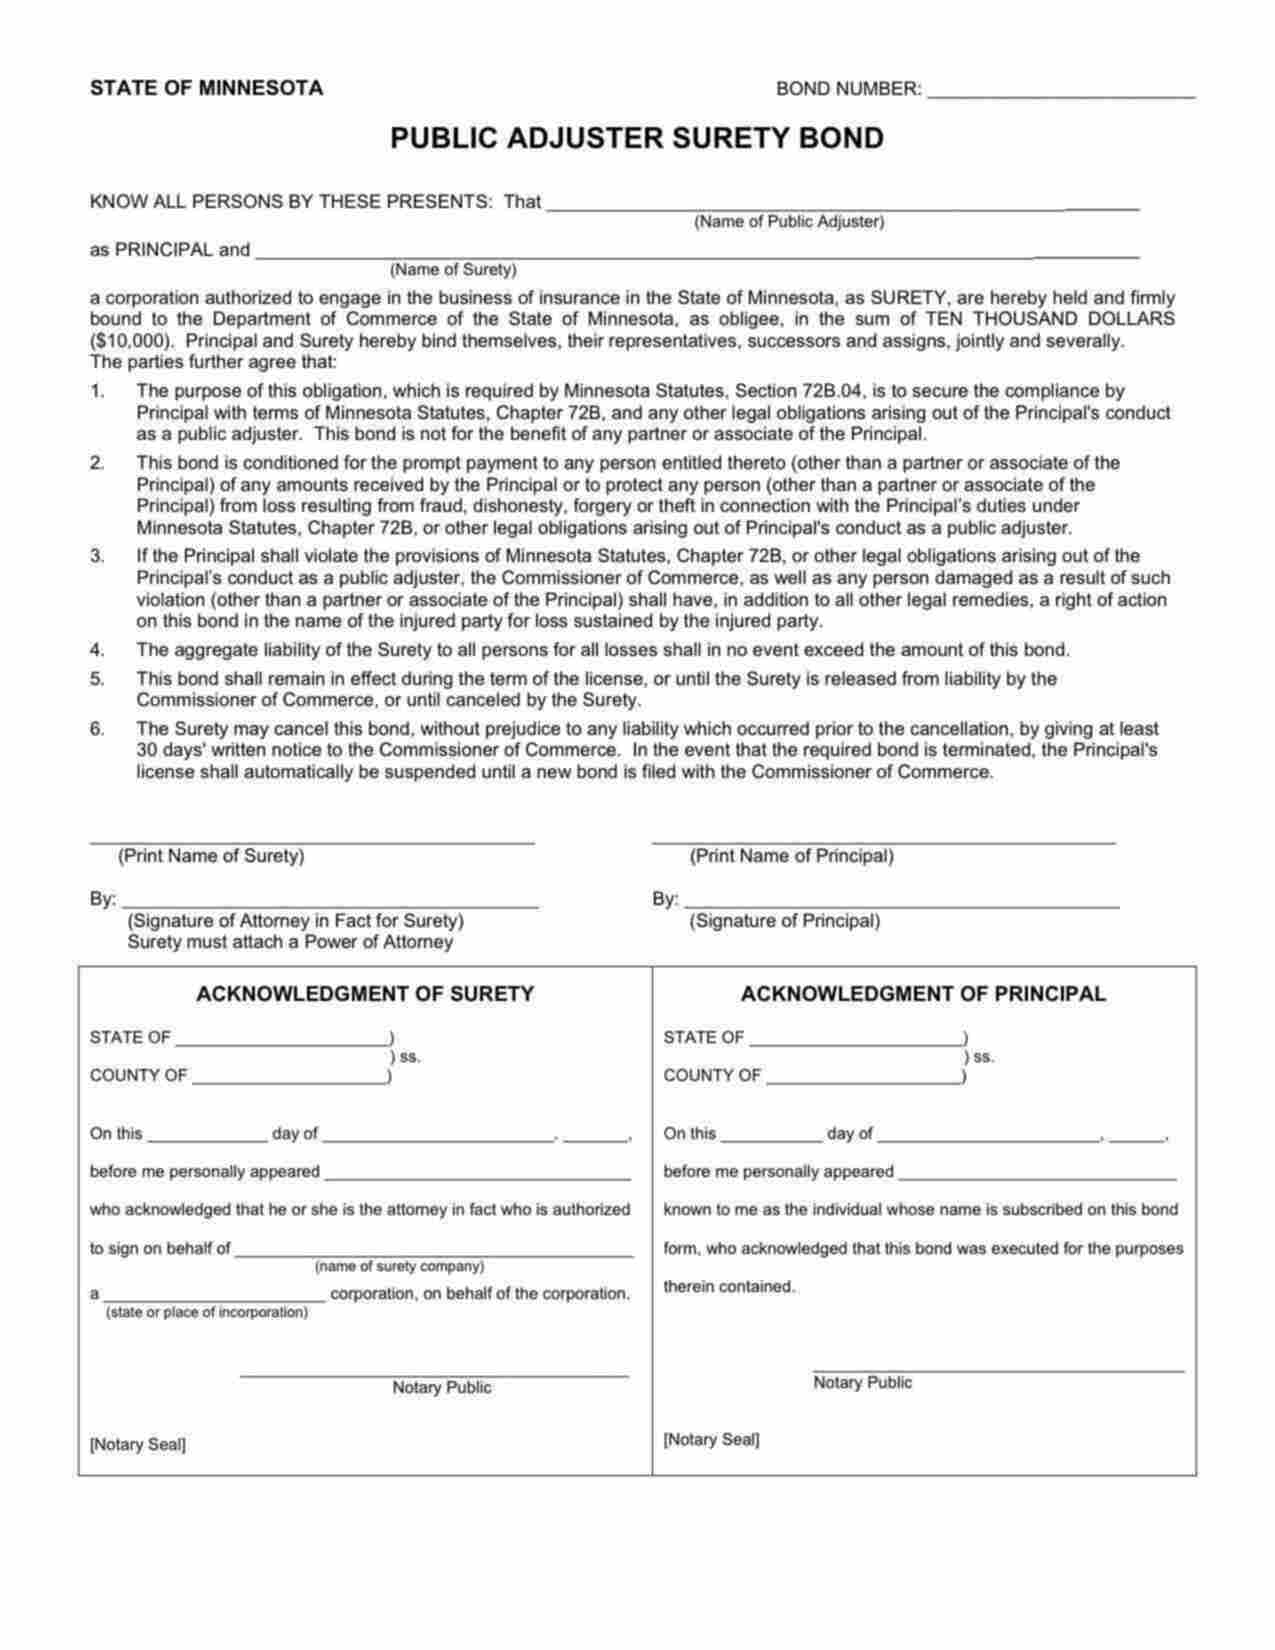 Minnesota Public Adjuster Bond Form